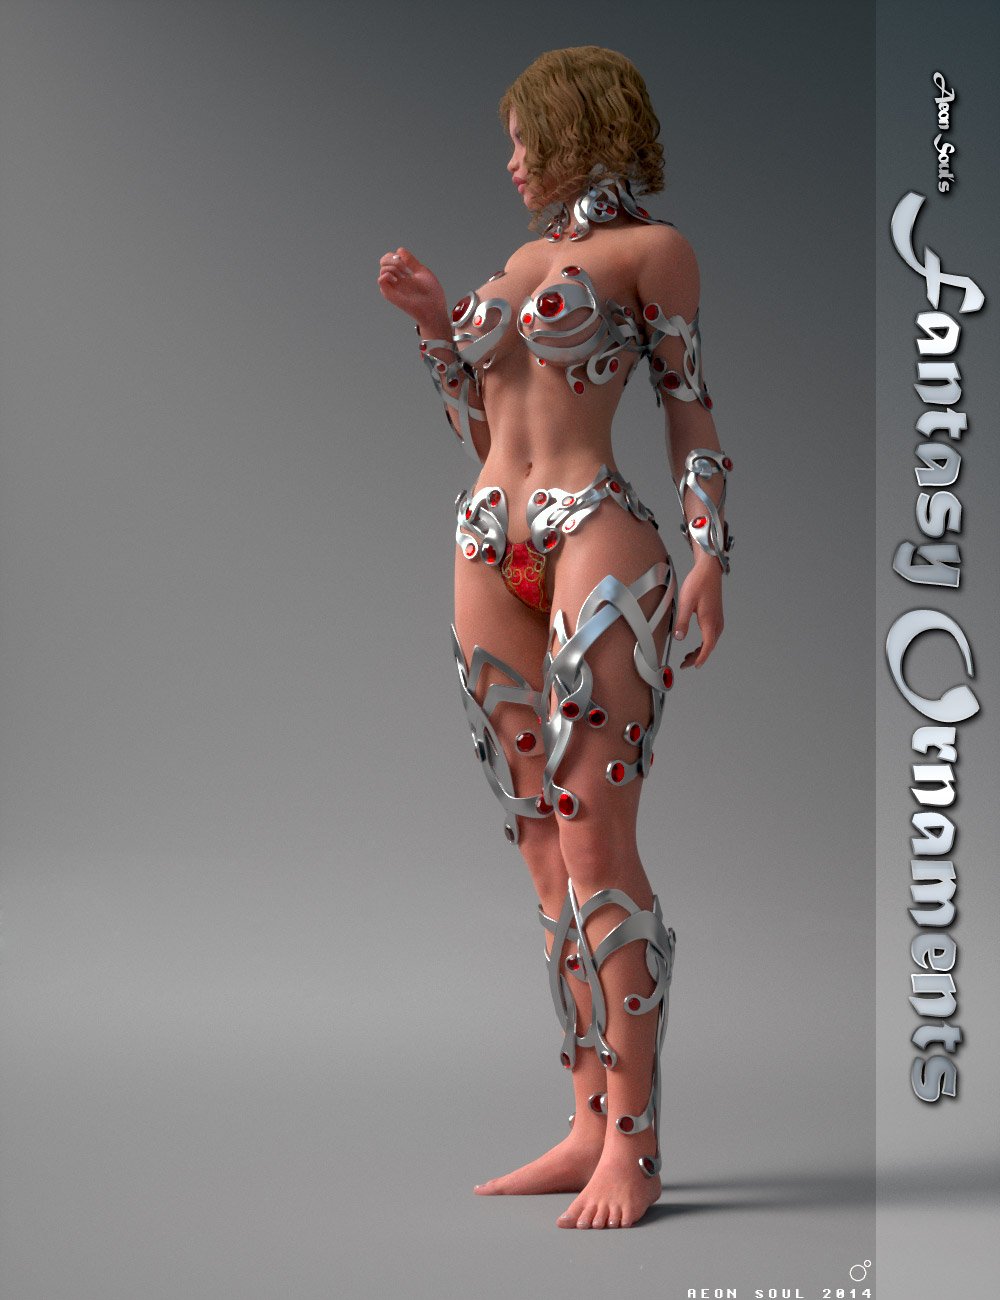 Fantasy Ornaments for Genesis 2 Female(s) by: Aeon Soul, 3D Models by Daz 3D